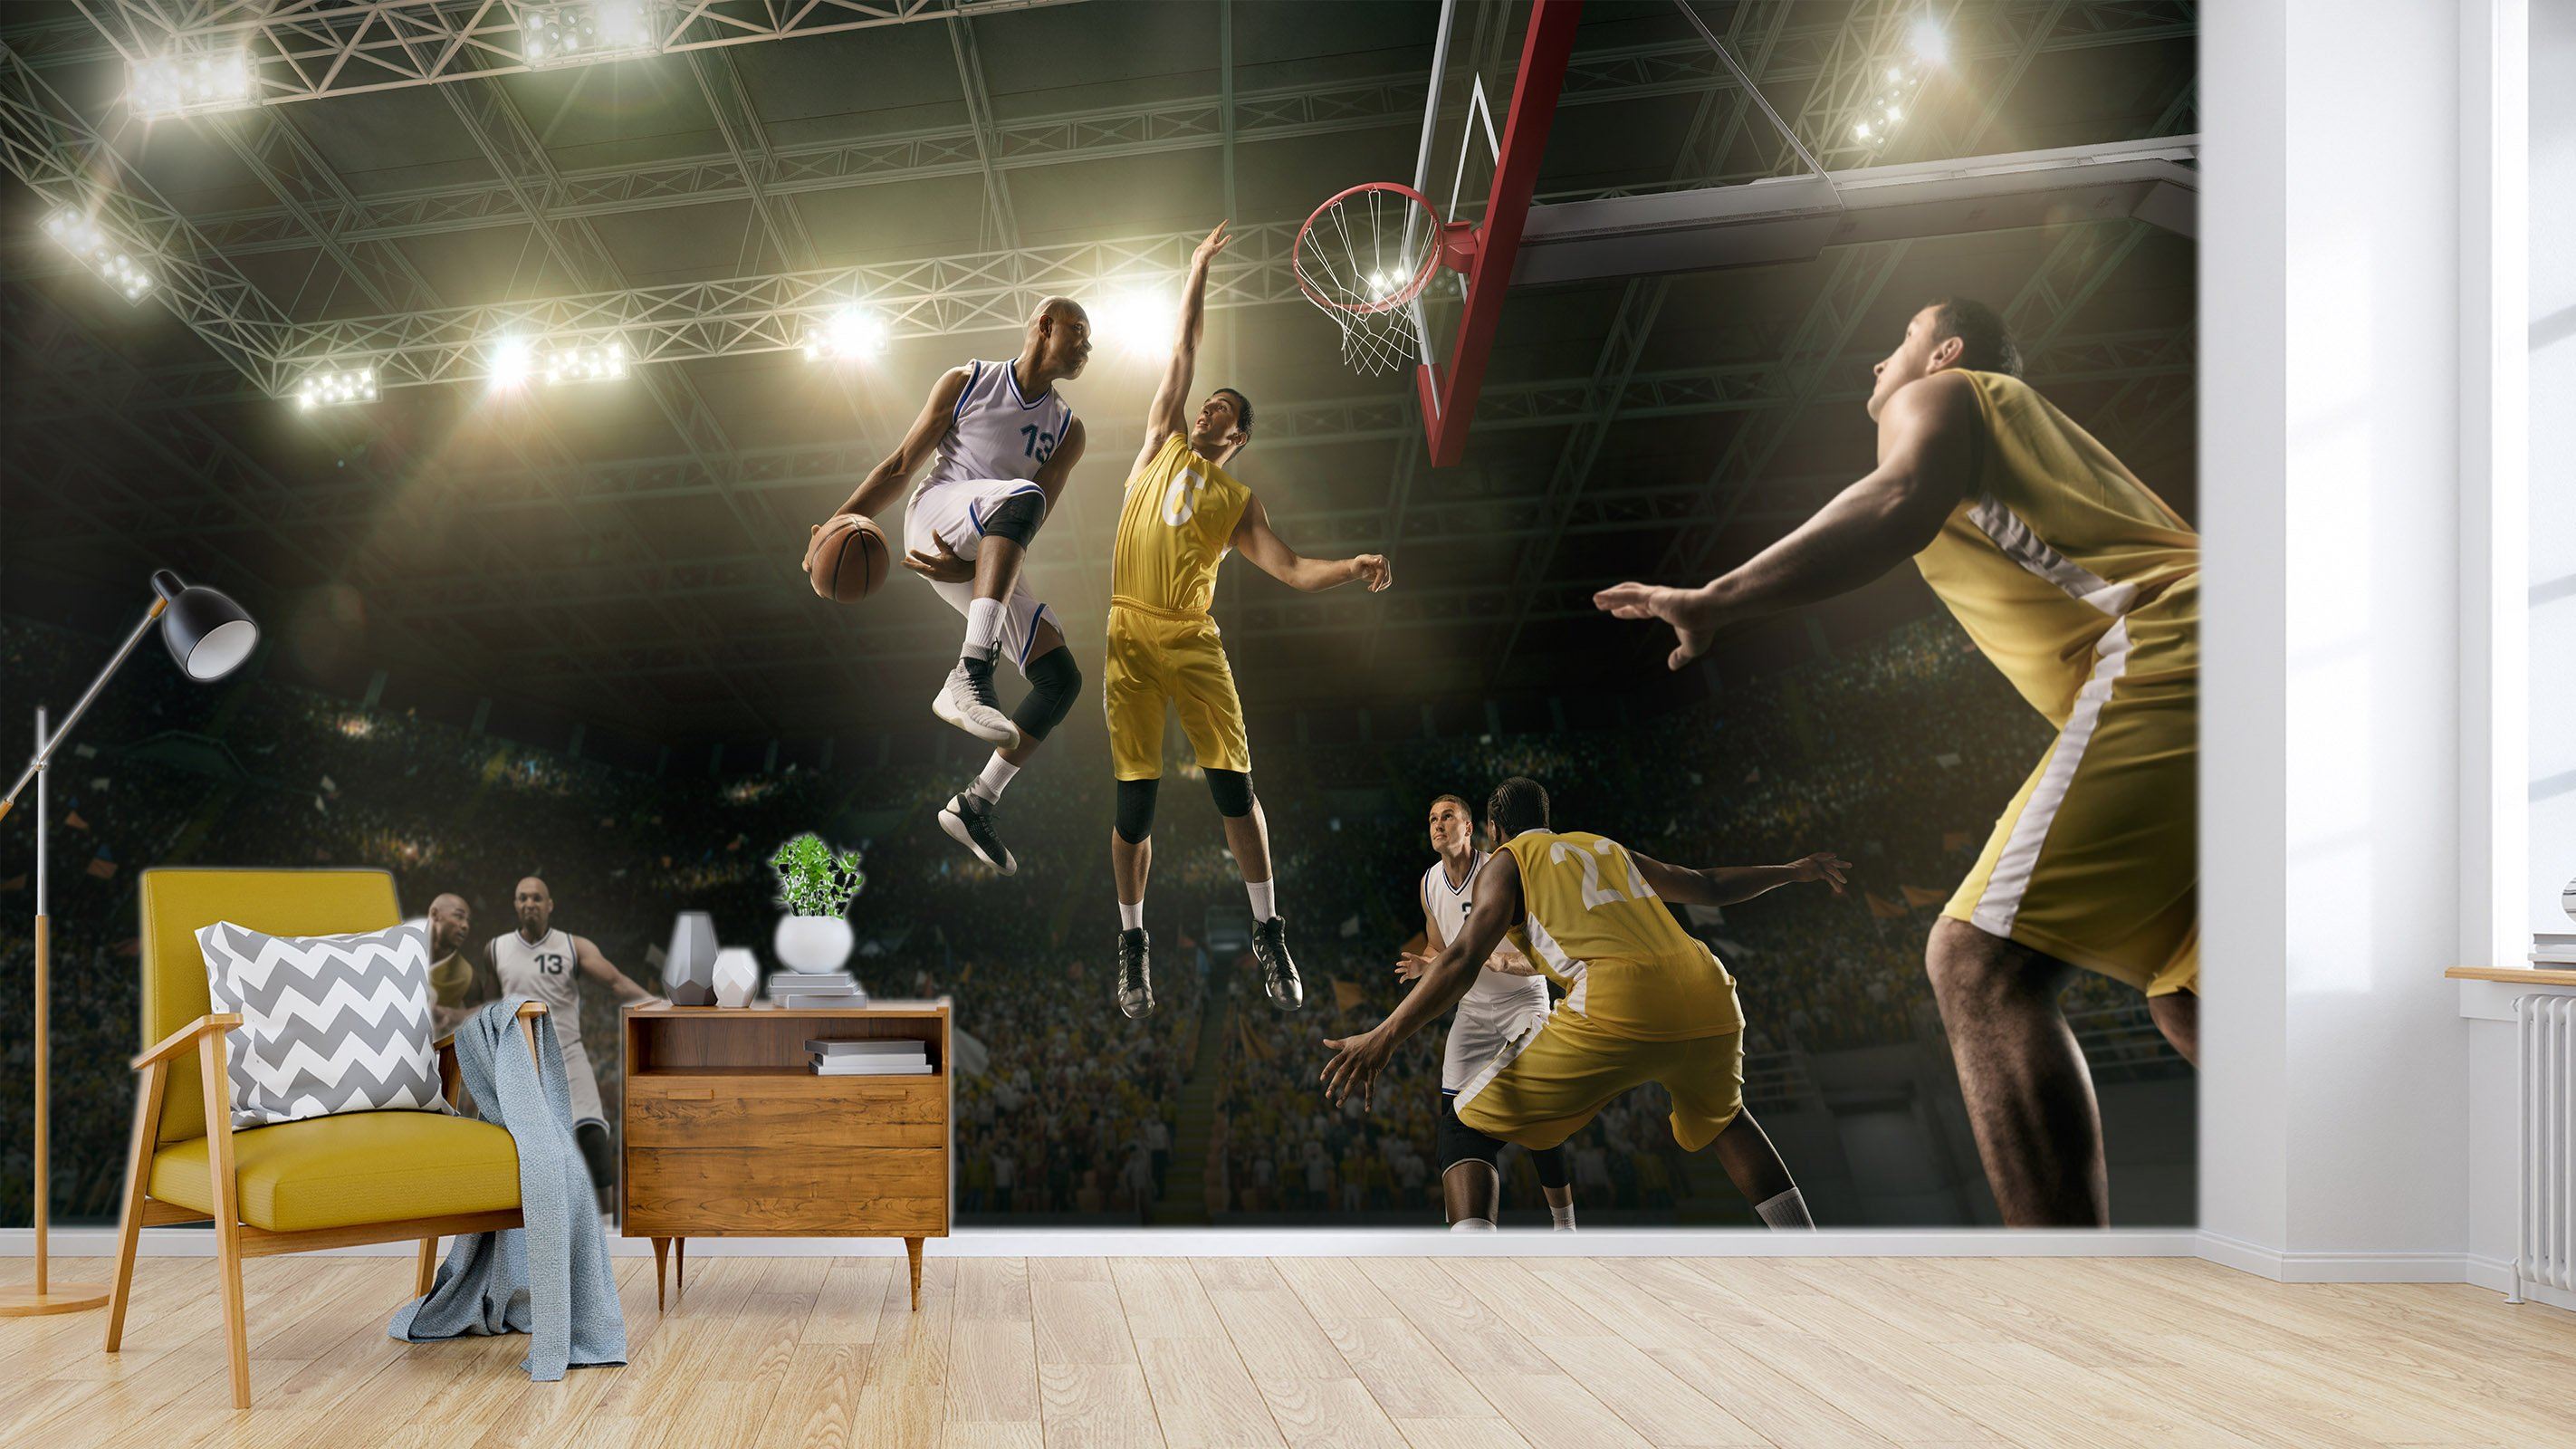 3D Basketball Dunk Athlete 3543 Wallpaper AJ Wallpaper 2 